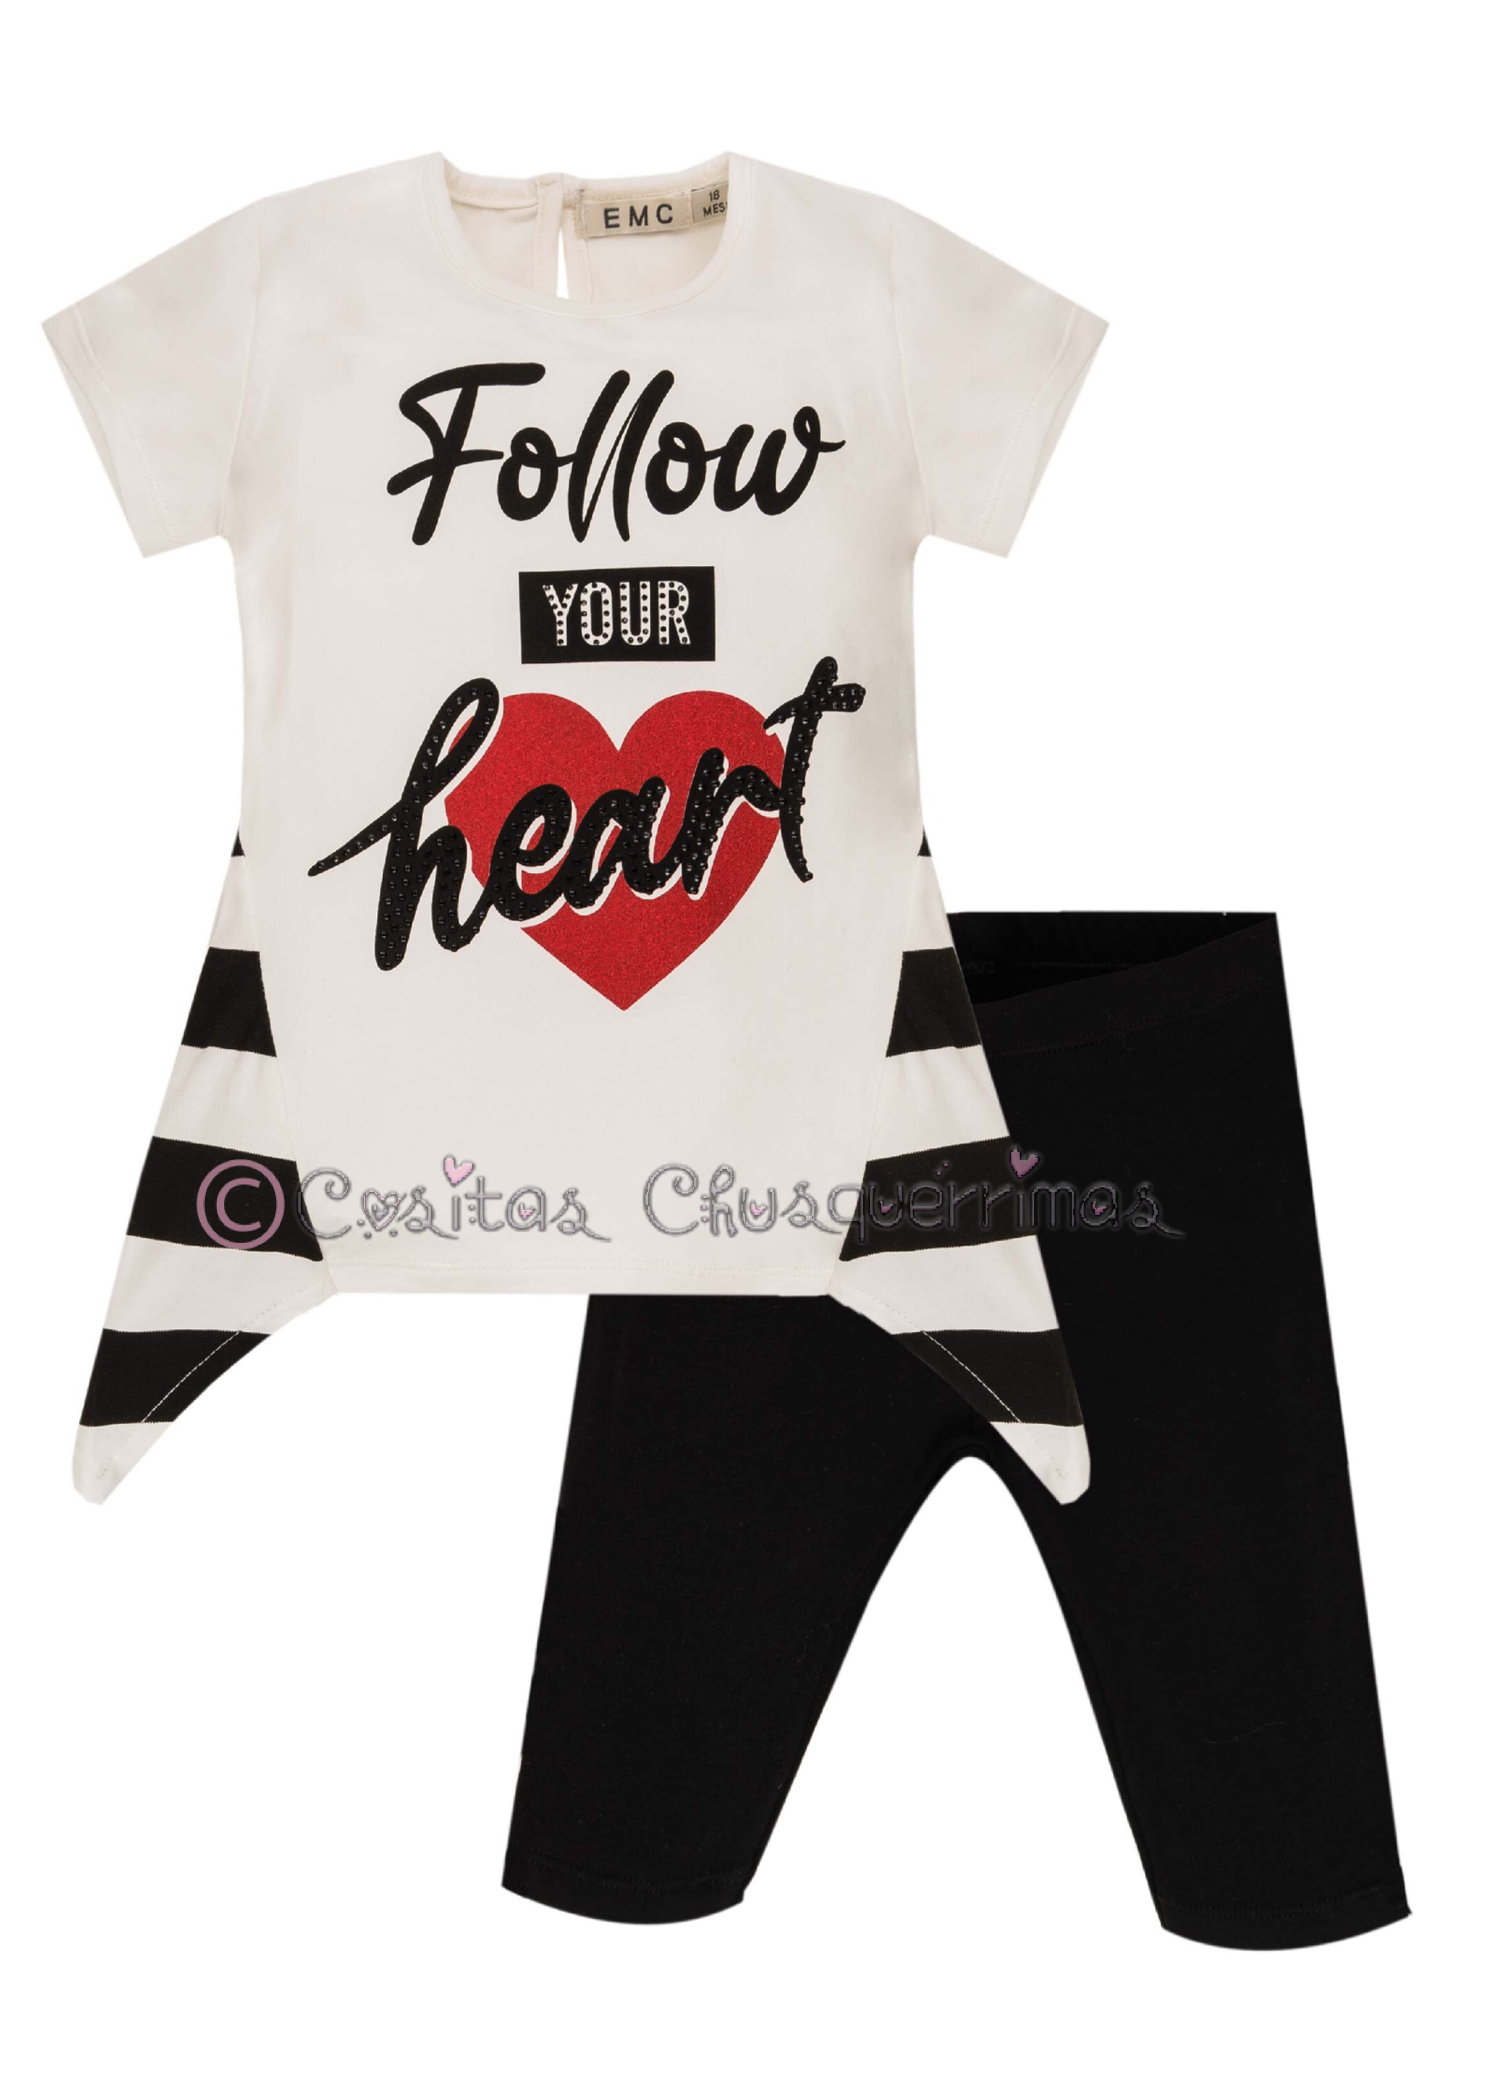 Camiseta rayas negra y blanca - Poison Heart Clothing